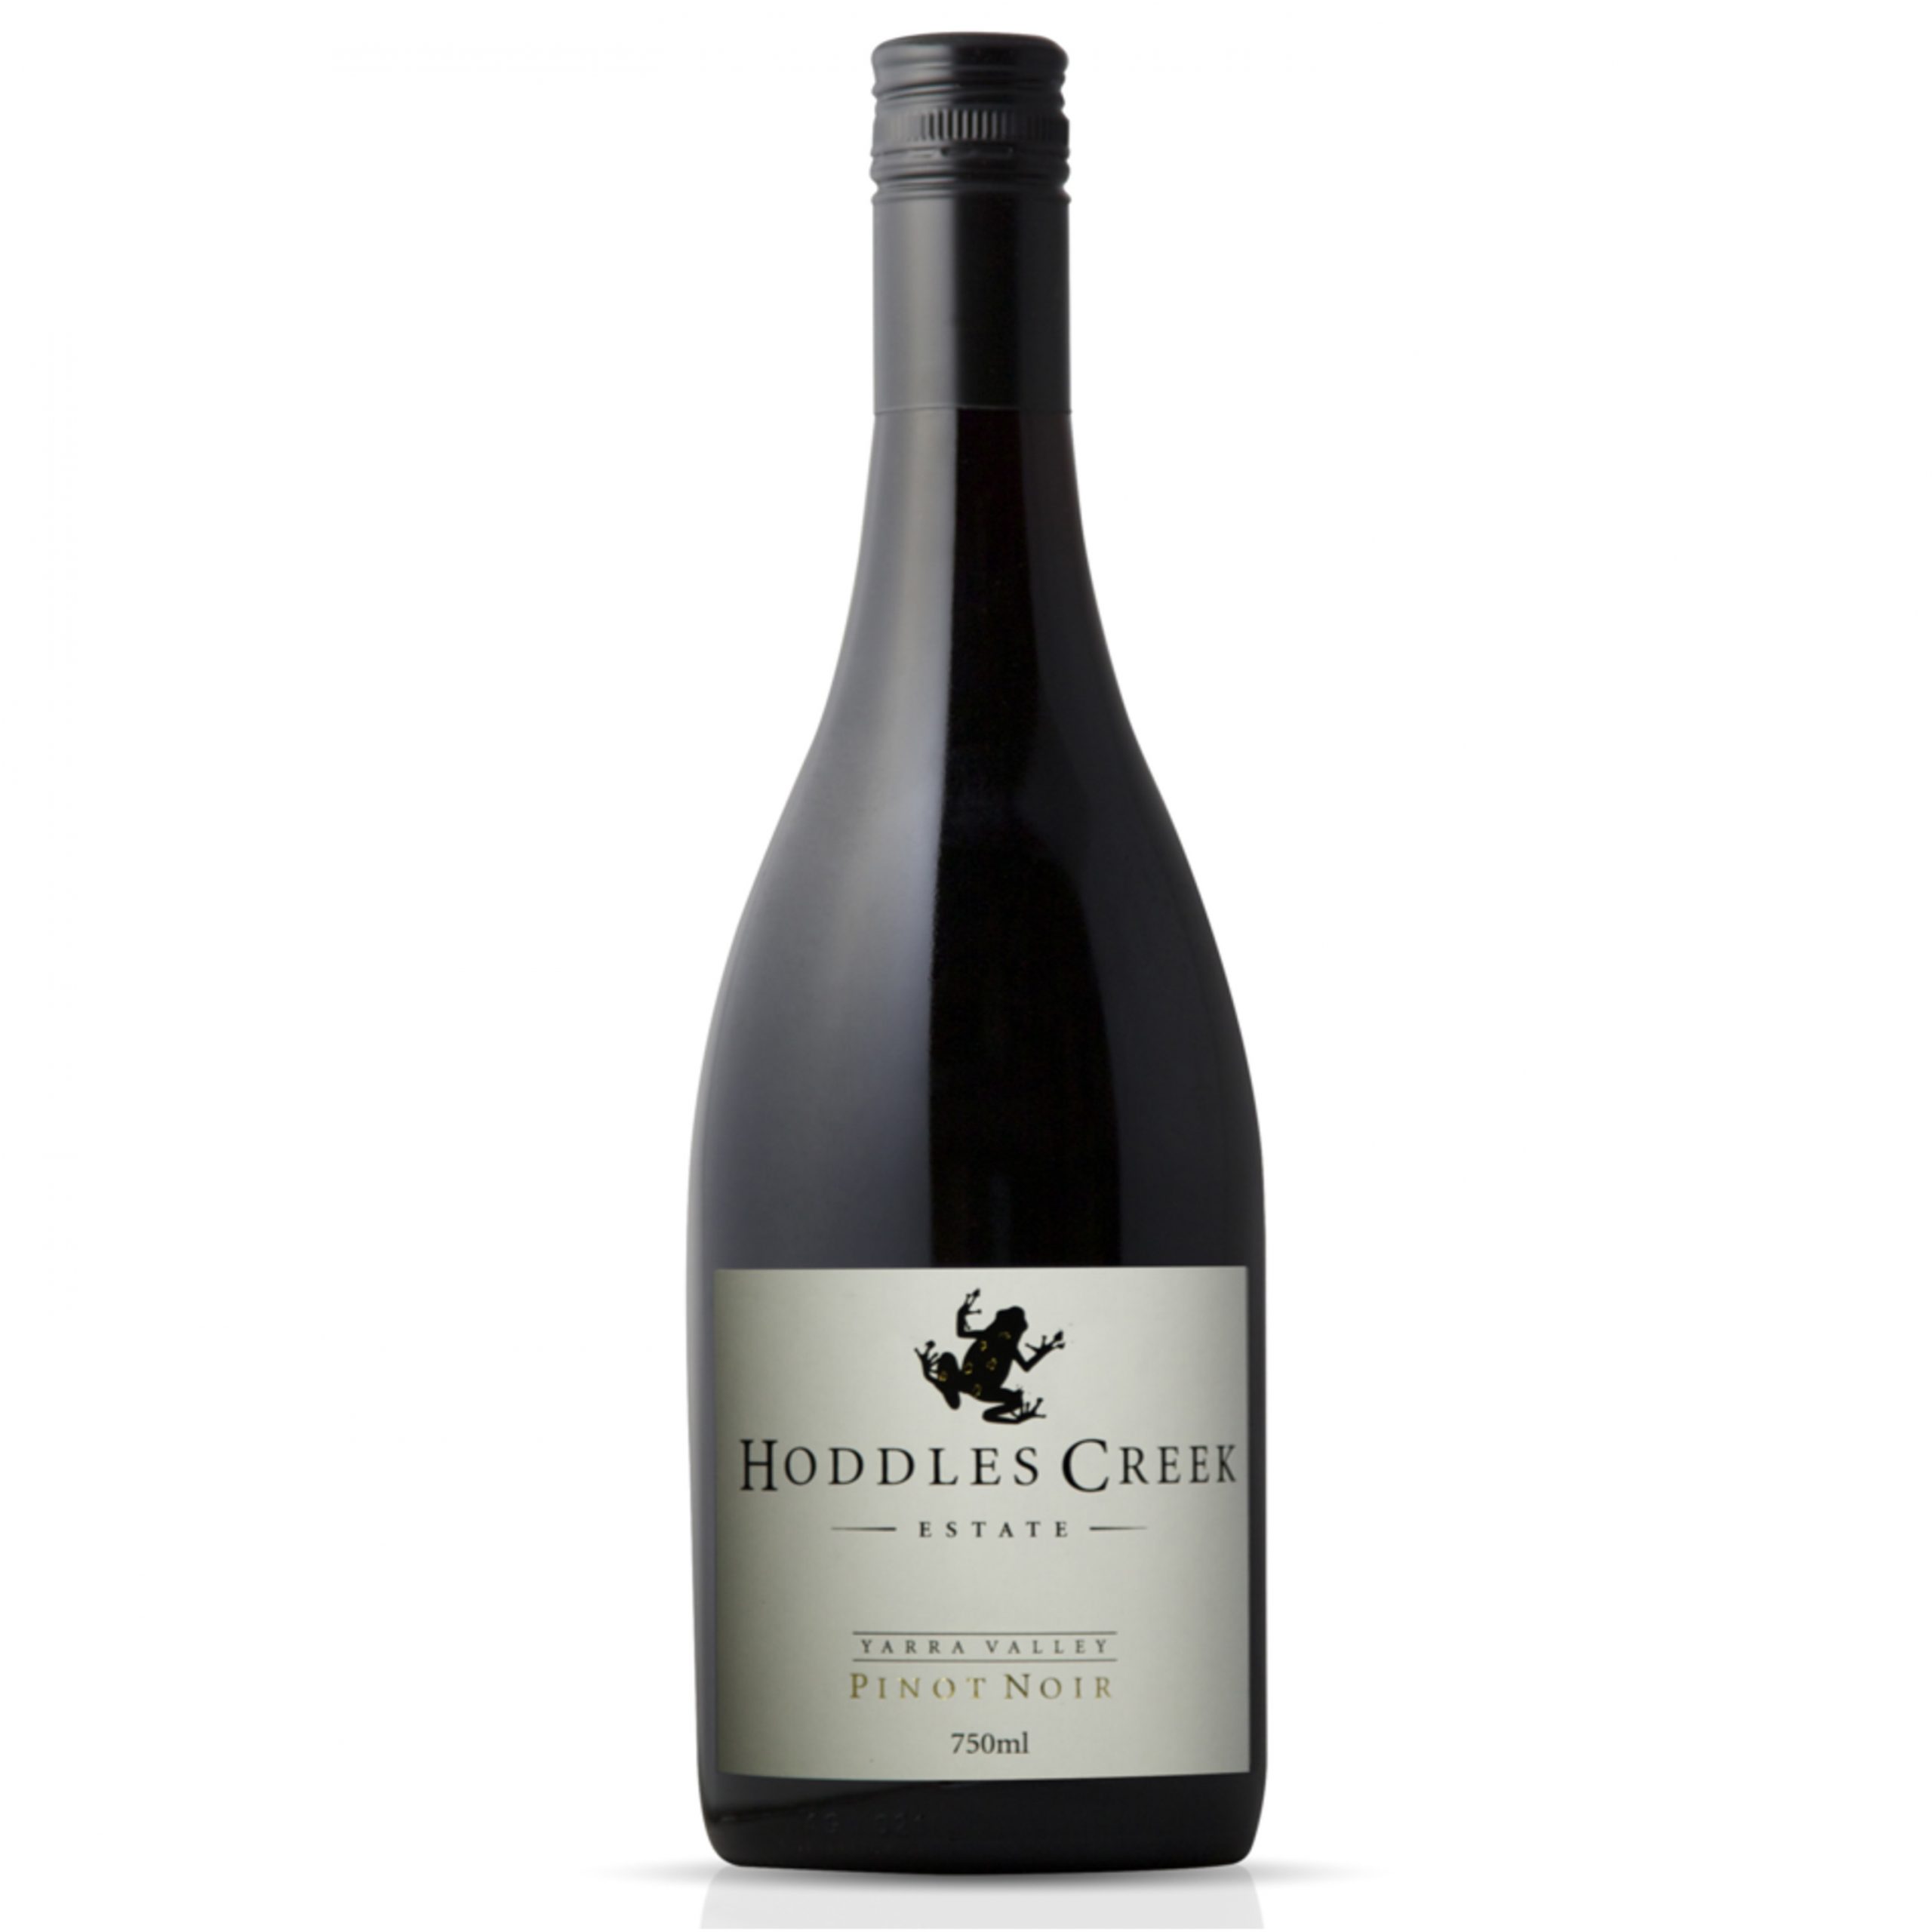 Hoddles Creek Pinot Noir & Chardonnay 2020 release is here